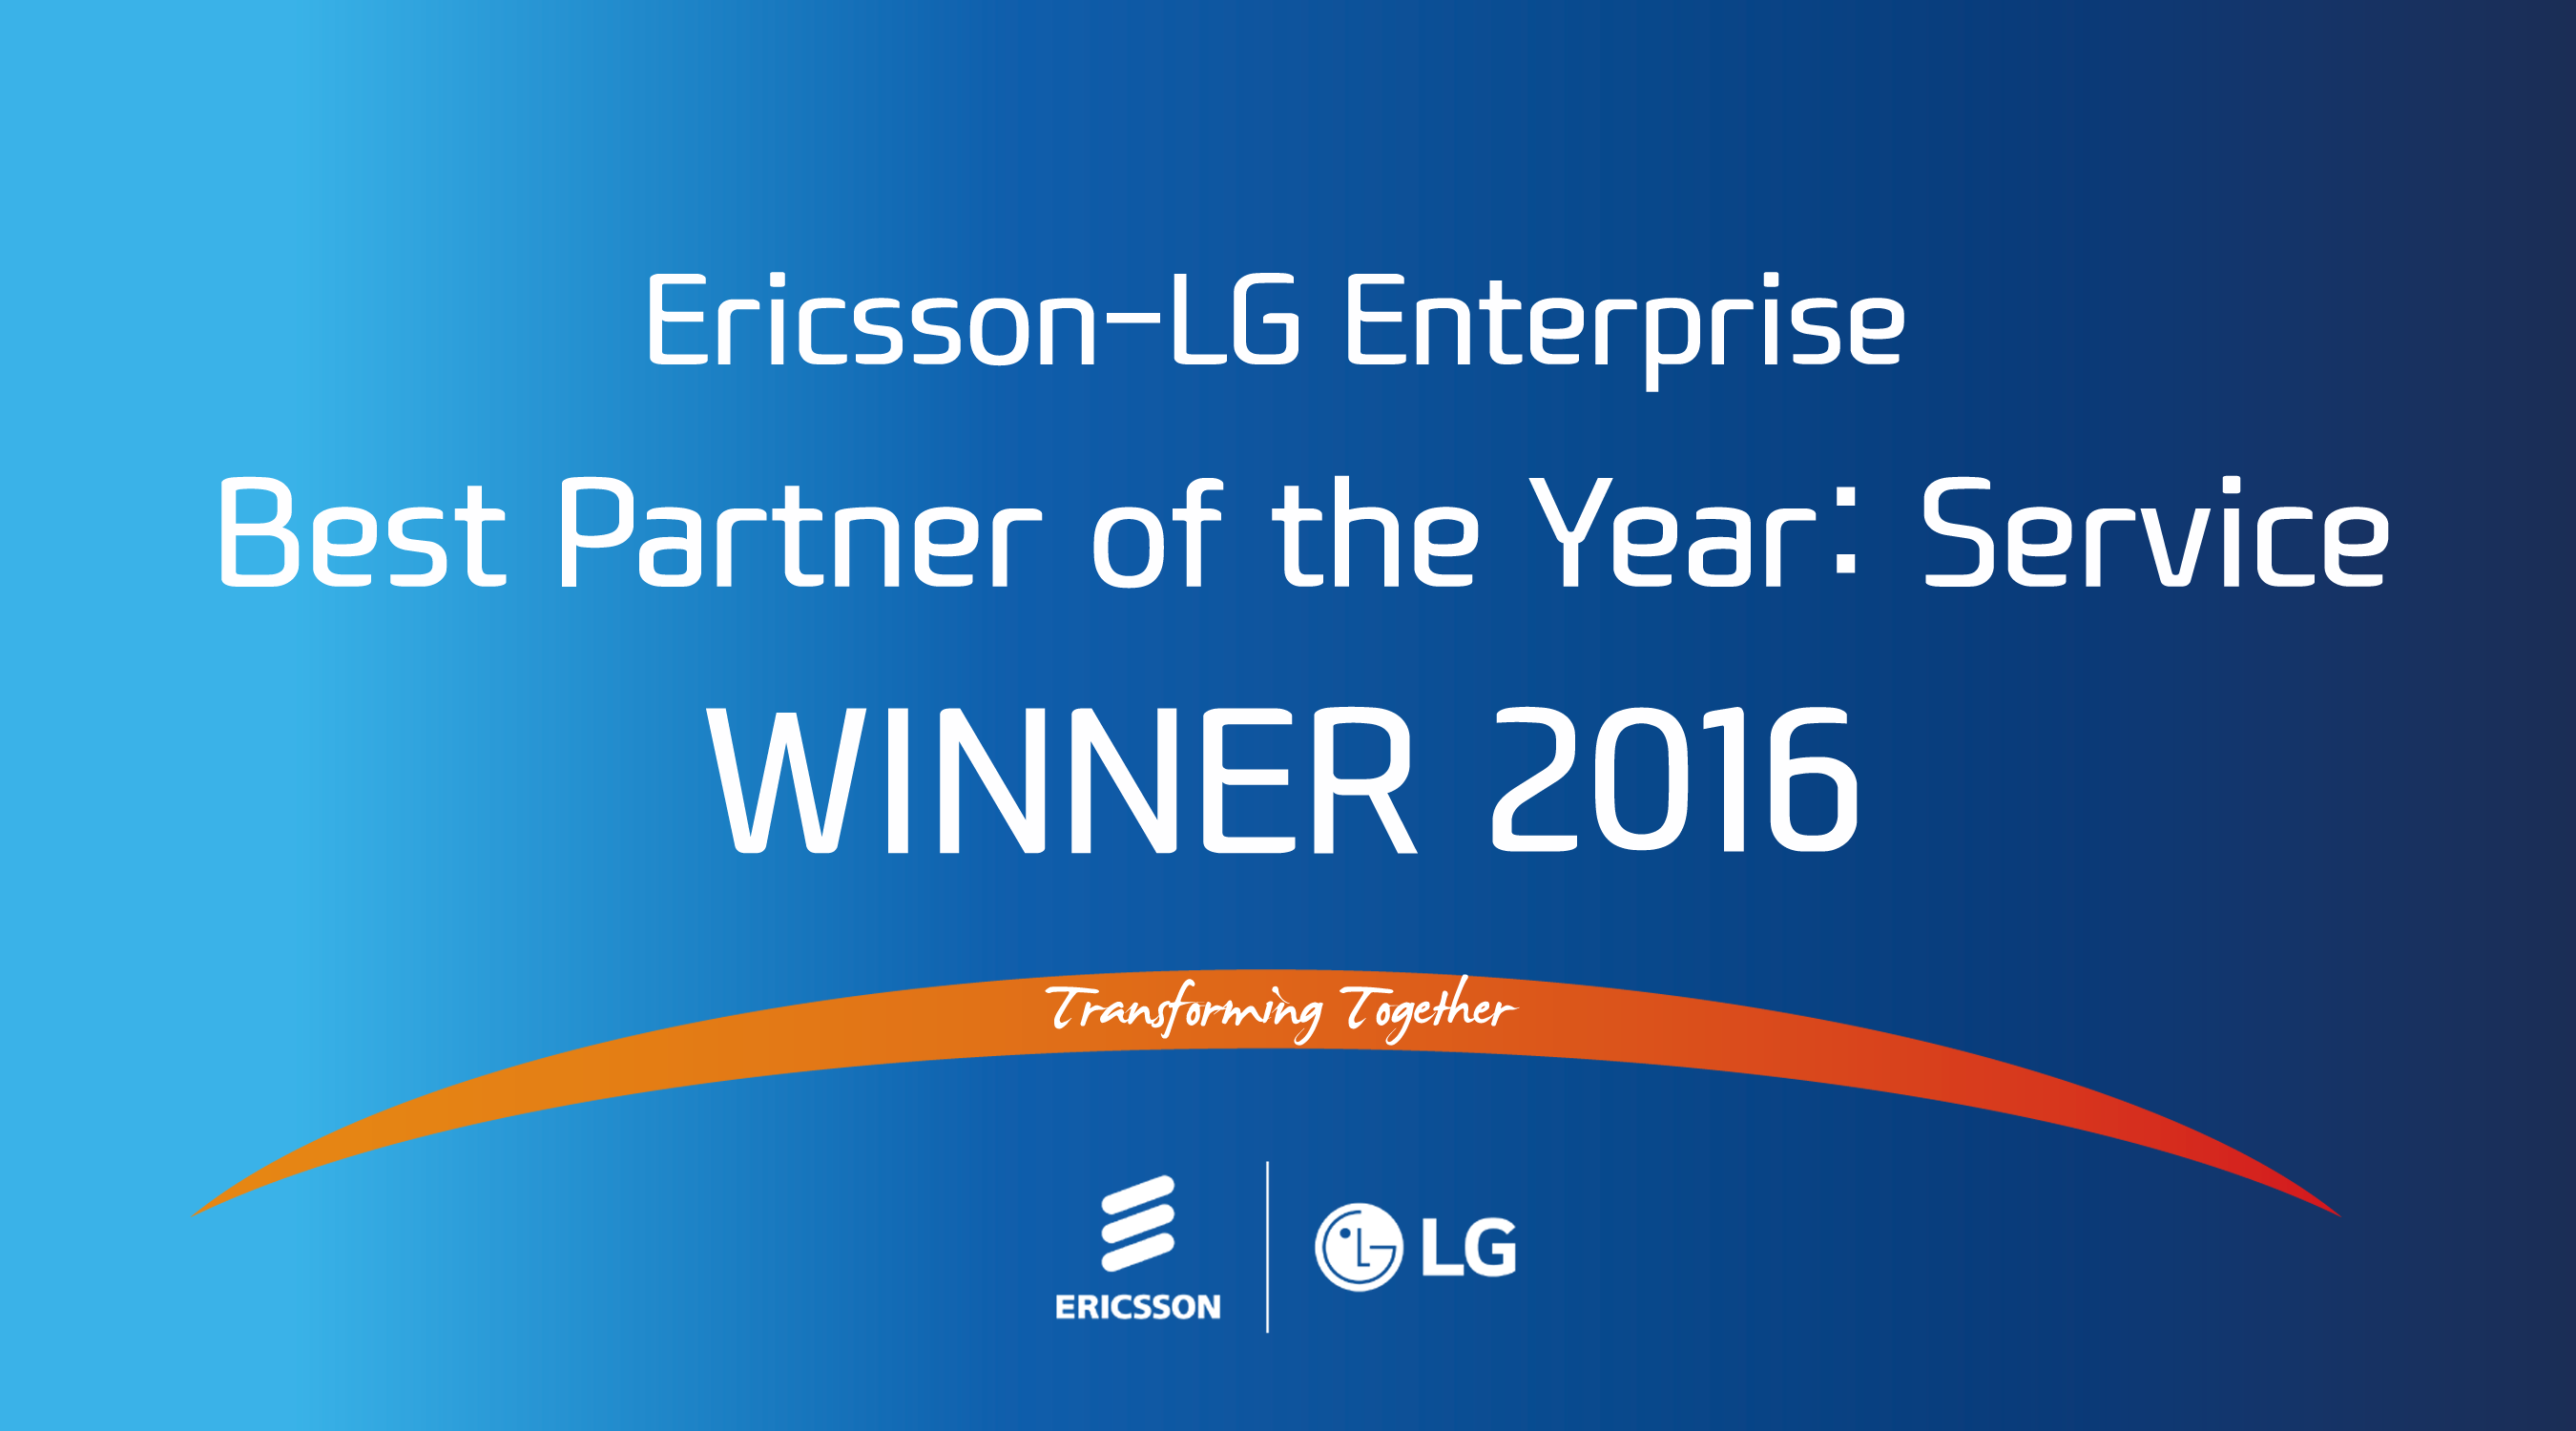 Ericsson-LG Enterprise Best Partner of the Year - Service 2016